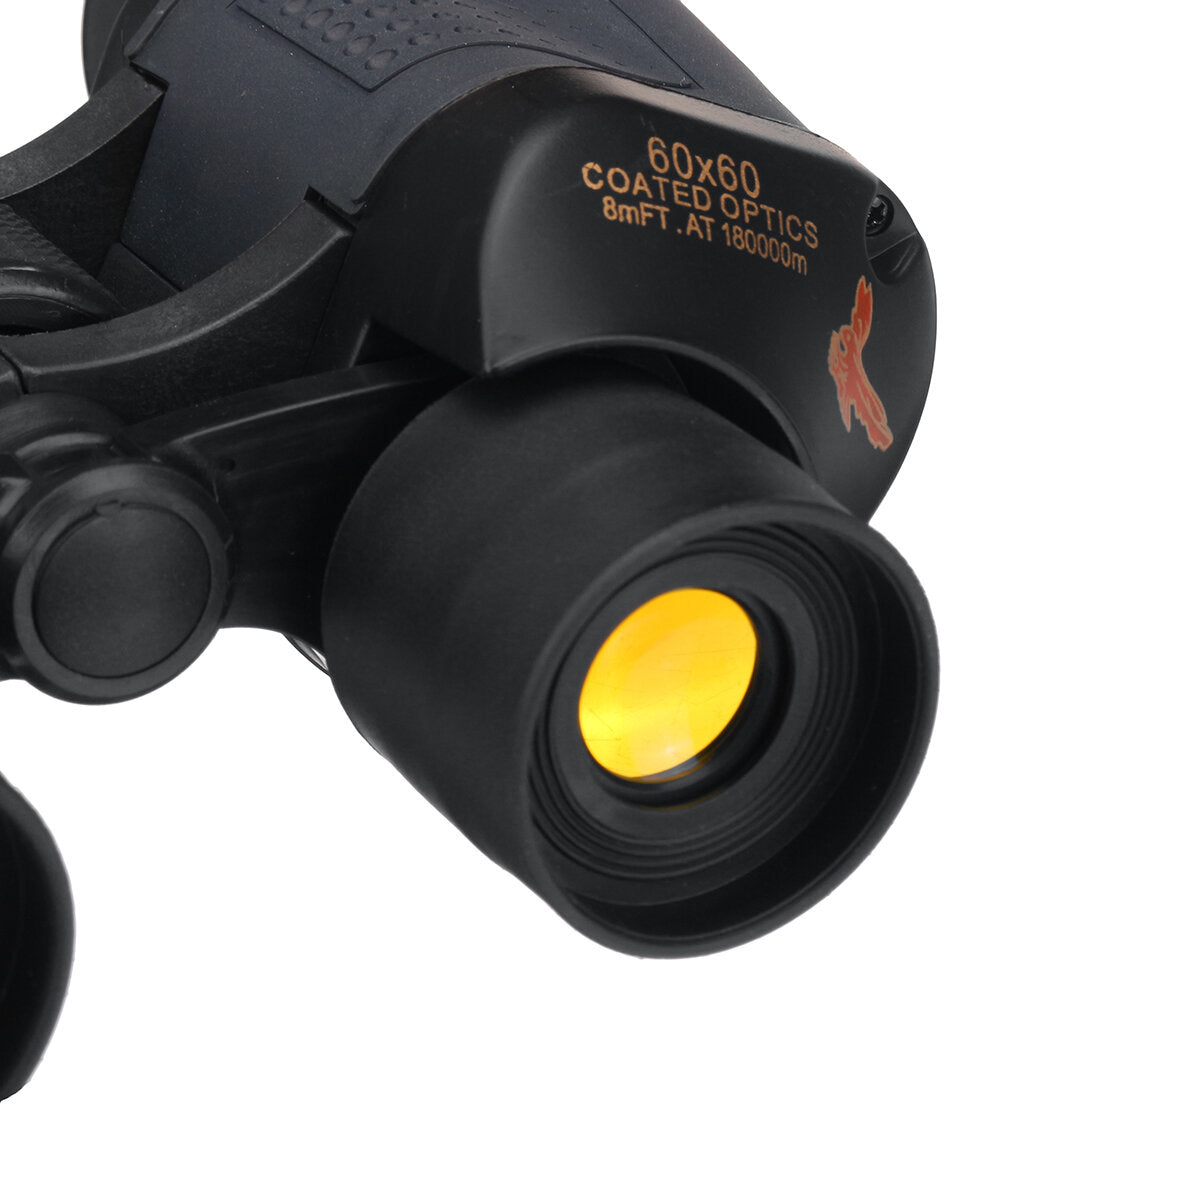 60x60 Outdoor BAK4 Prisms Large View HD Binoculars Low Night Vision Ightseeing Business Investigation Bird Watching Camping